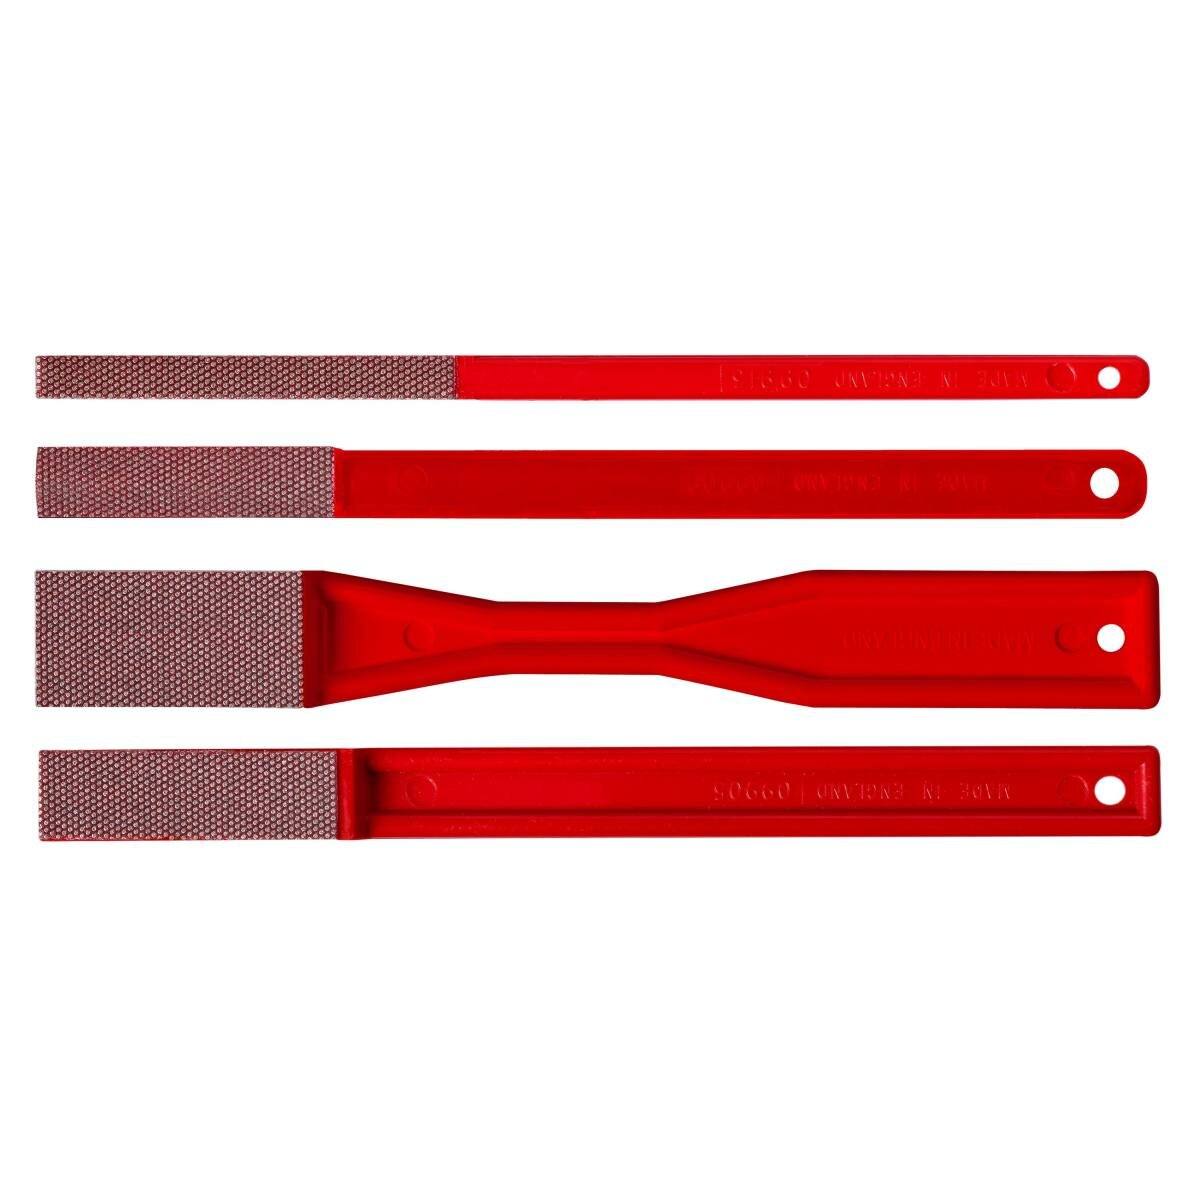 3M Joustava timanttiviila 6210J, nro 3, punainen, 12 mm x 44 mm, N74 #78656